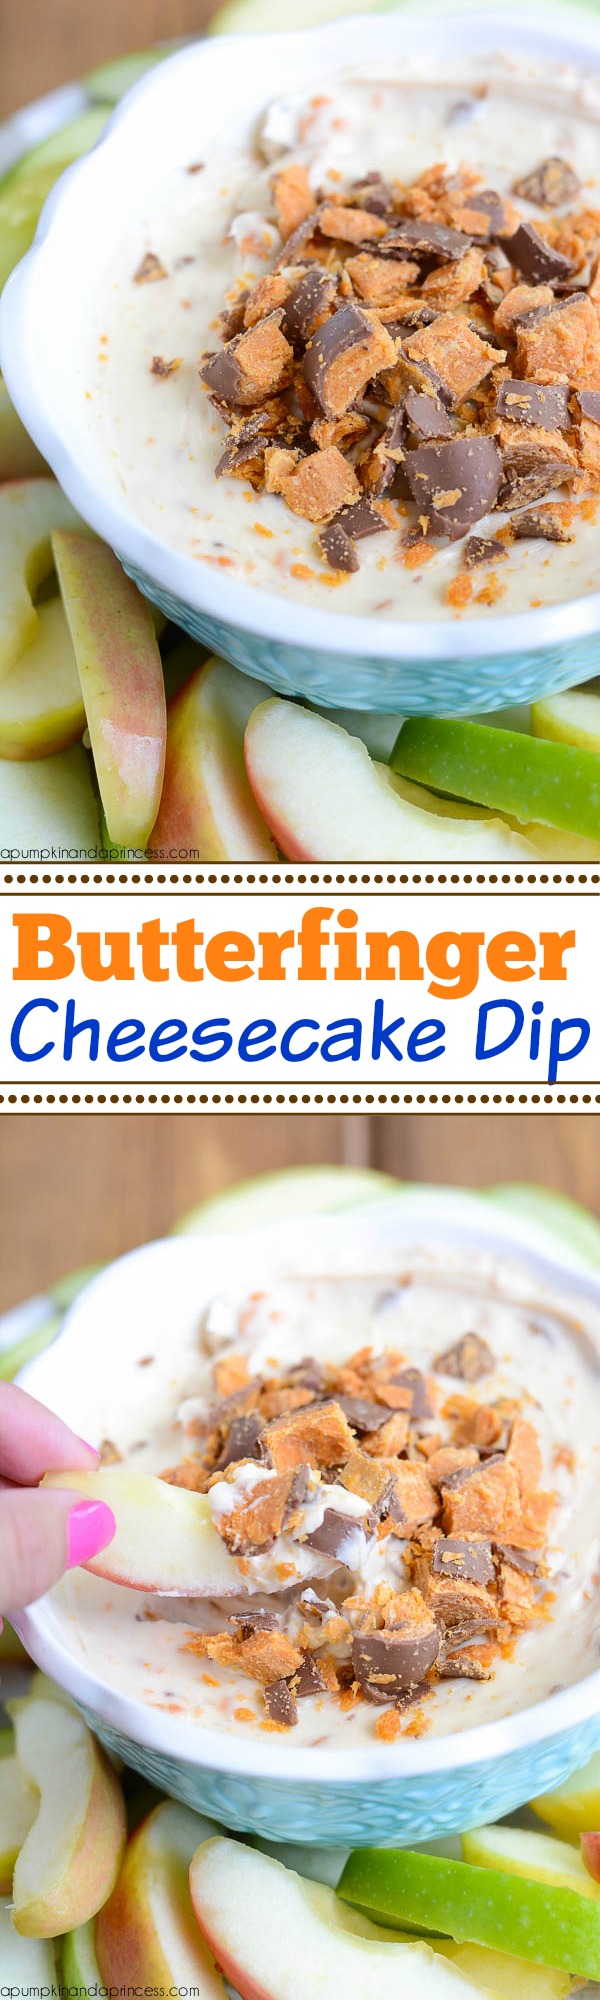 Butterfinger Cheesecake Dip